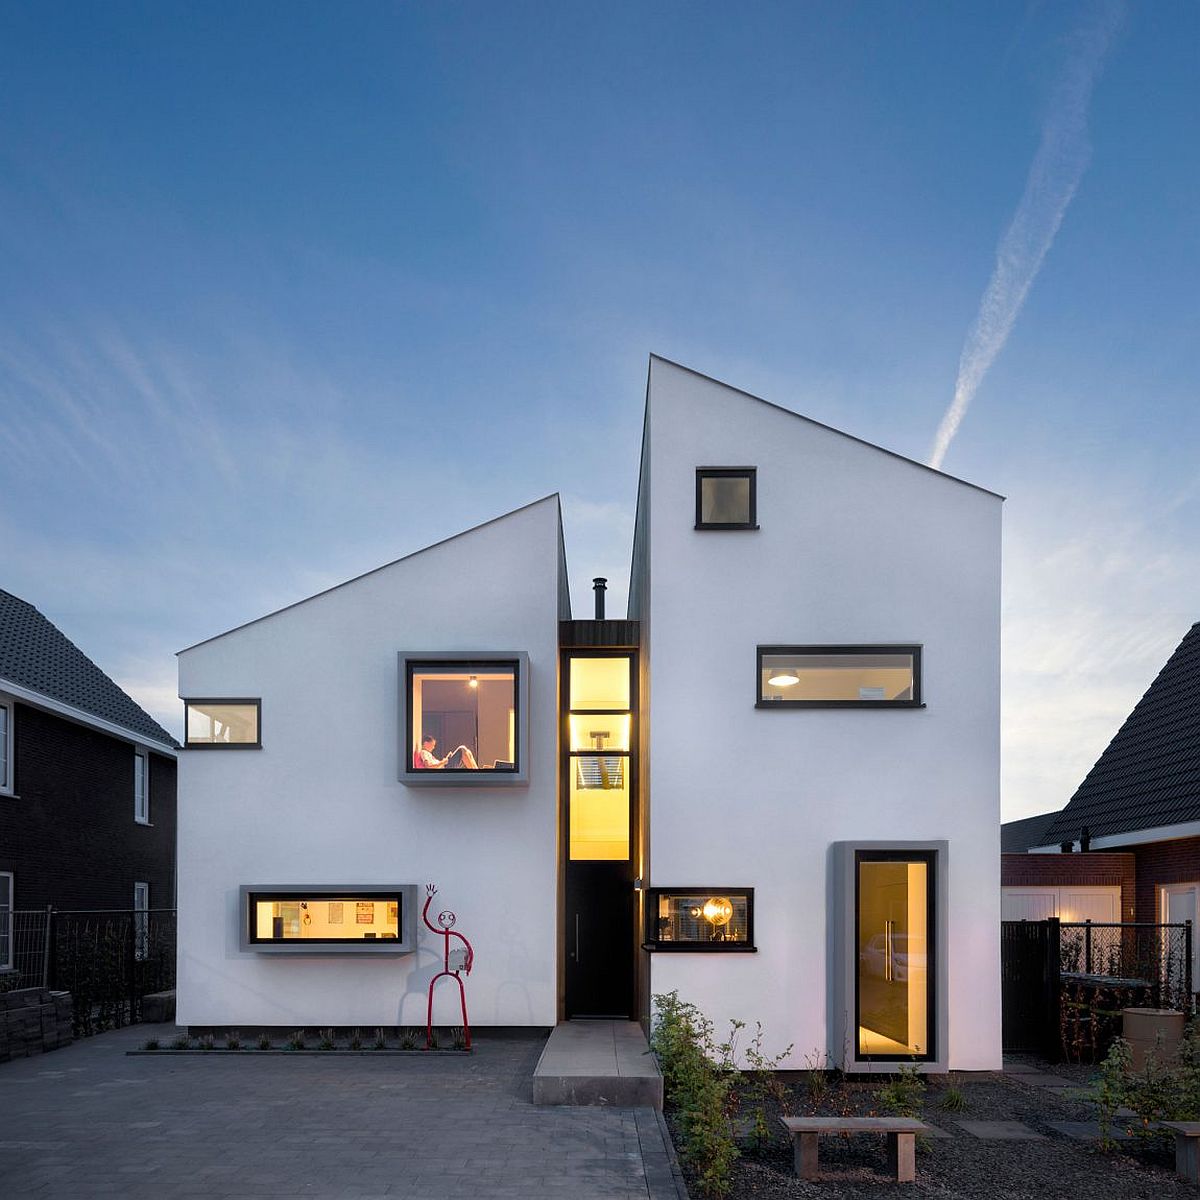 House Daasdonklaan: Traditional Dutch Design Meets Modern ...